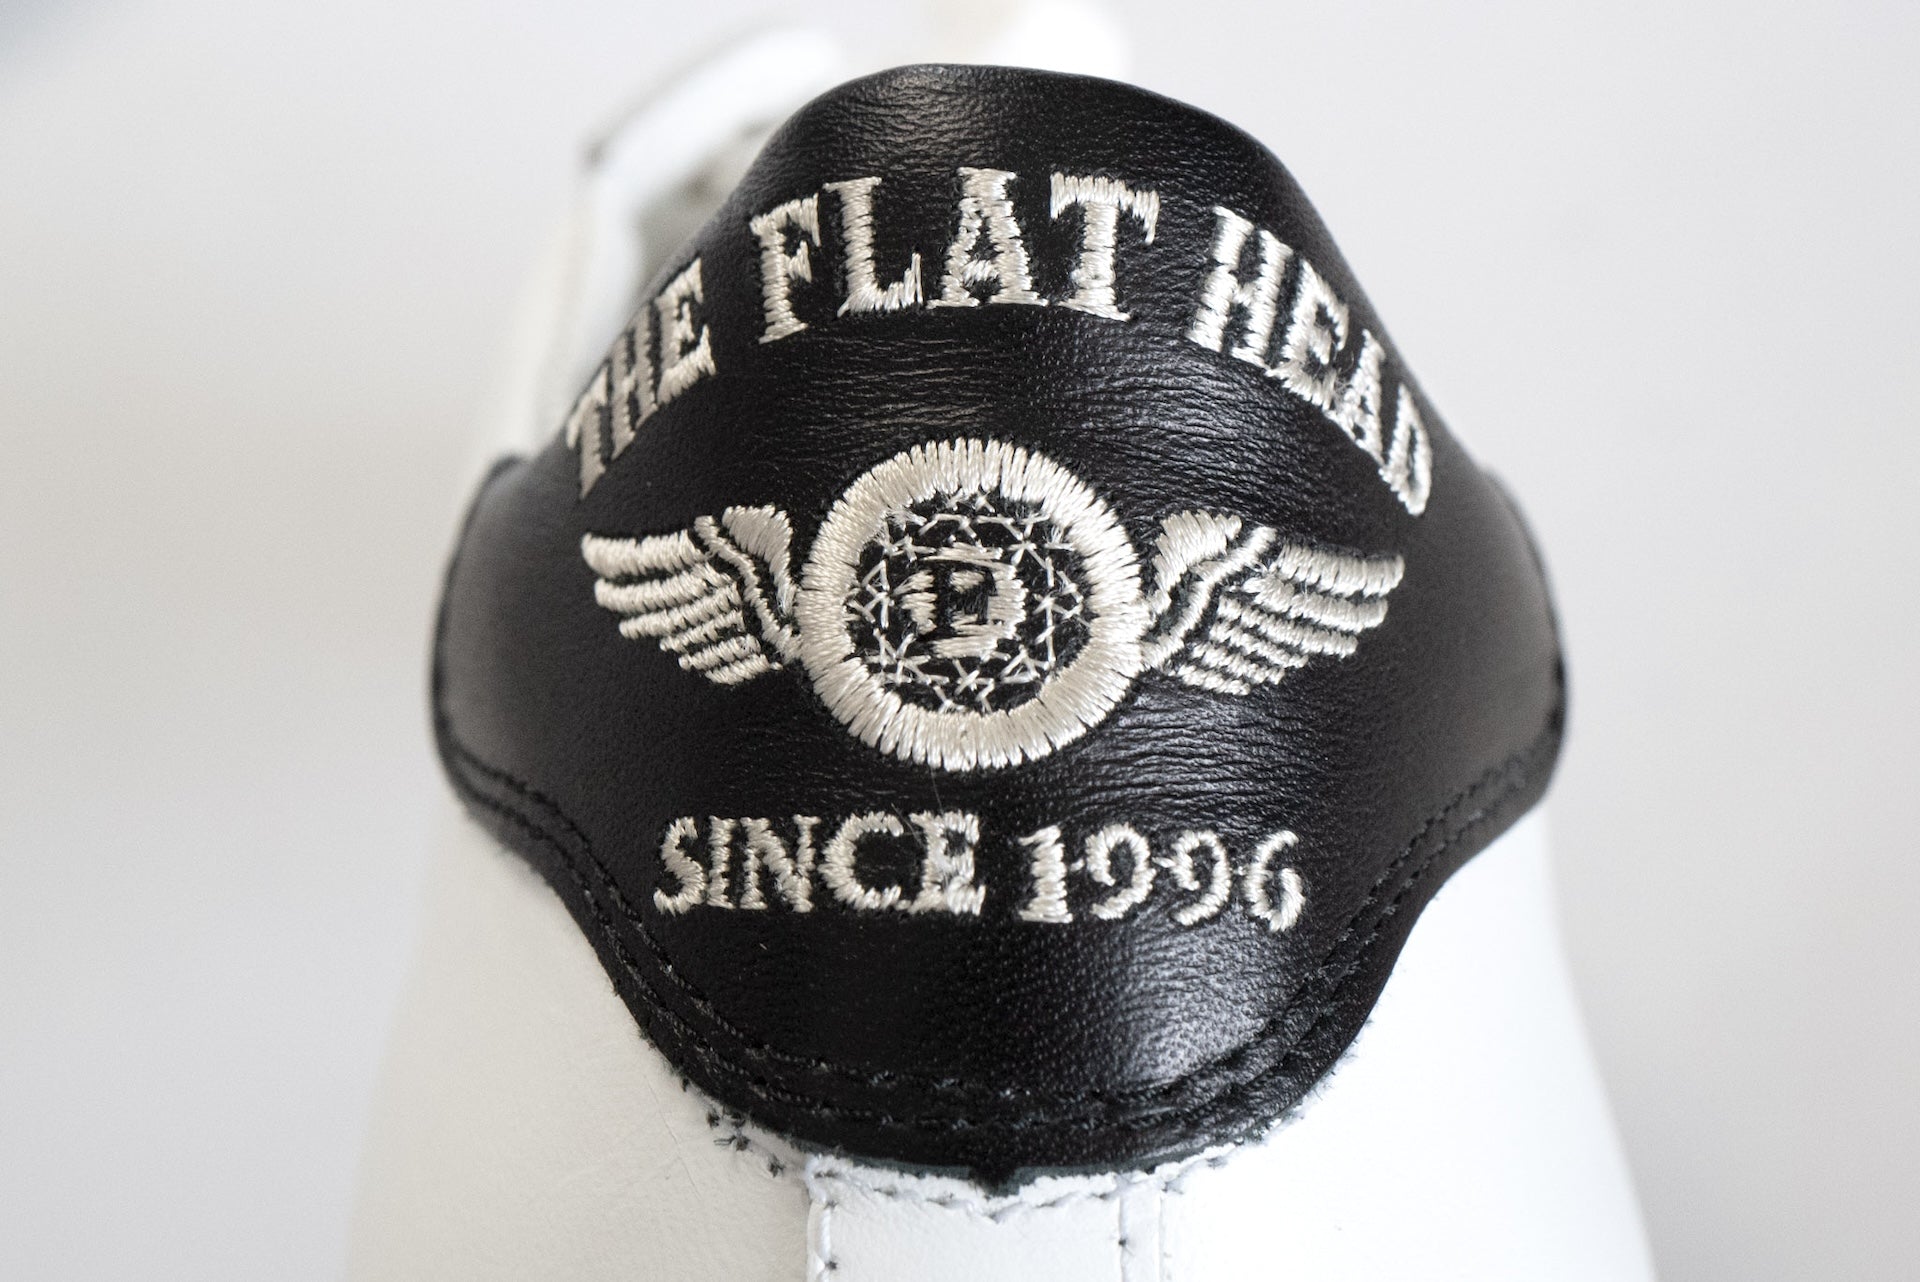 The Flat Head "Flying Wheel" Cowhide Sneakers (White)